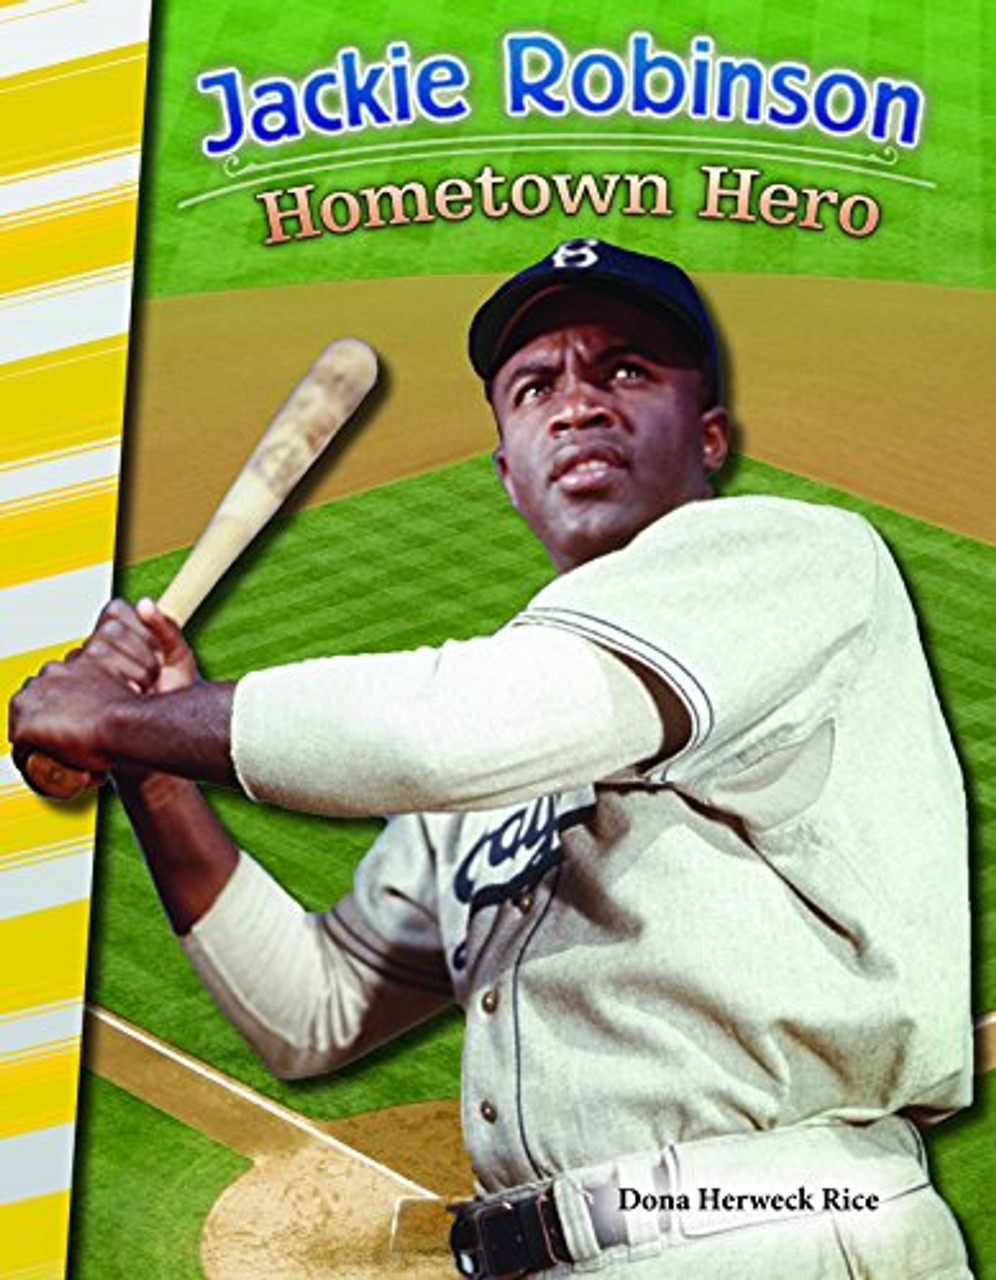 Jackie Robinson: Hometown Hero by Dona Herweck Rice